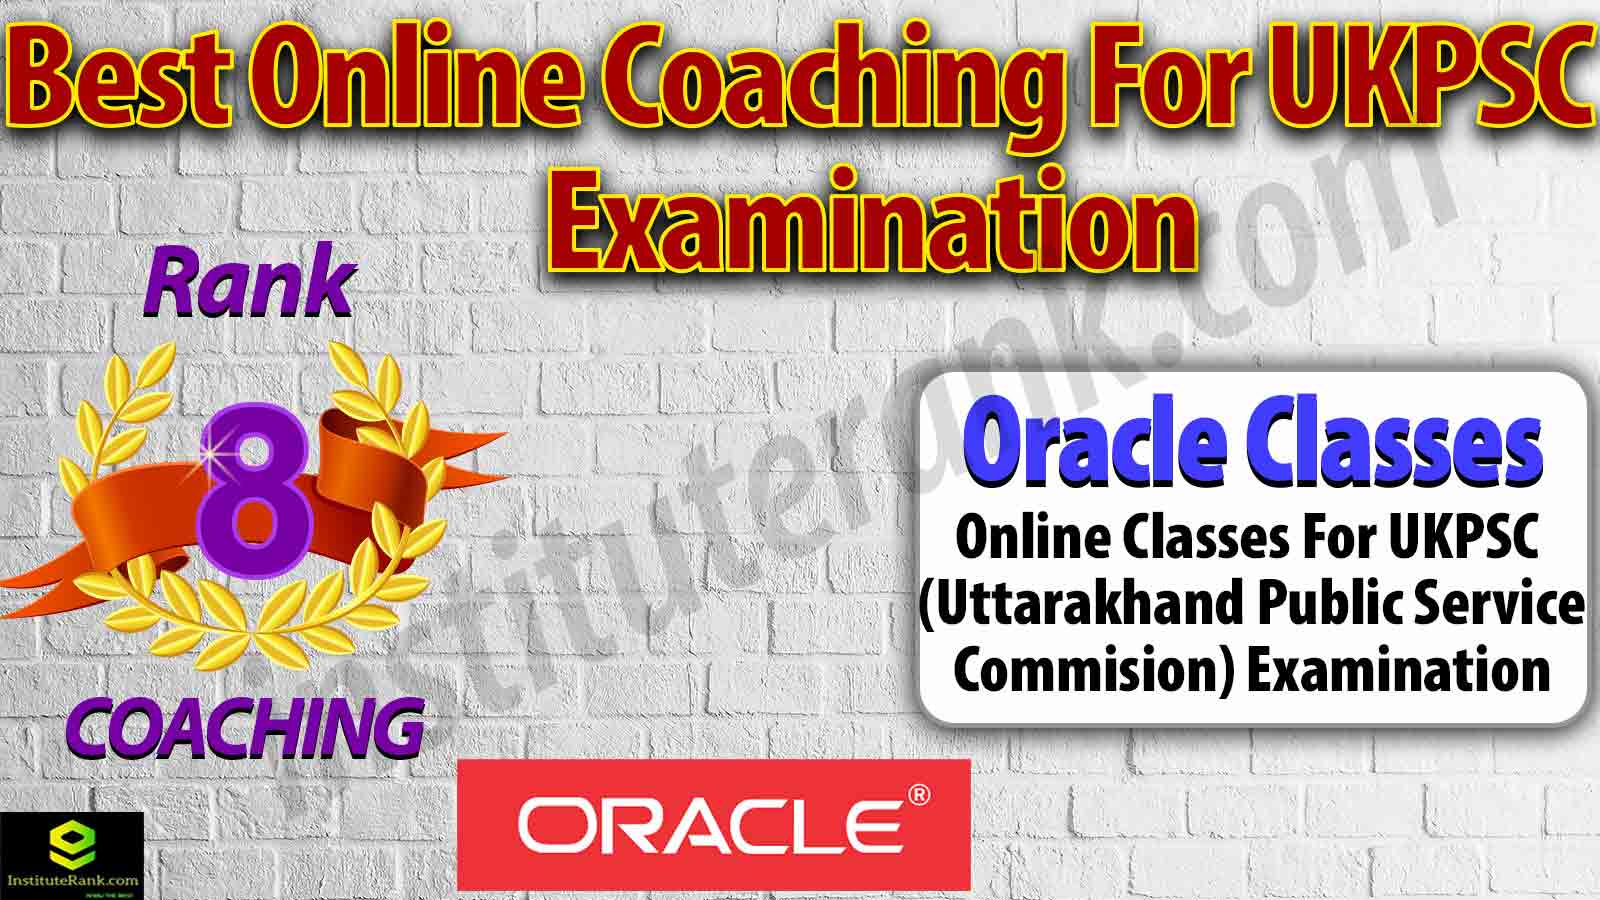 Best Online Coaching for UKPSC Preparation